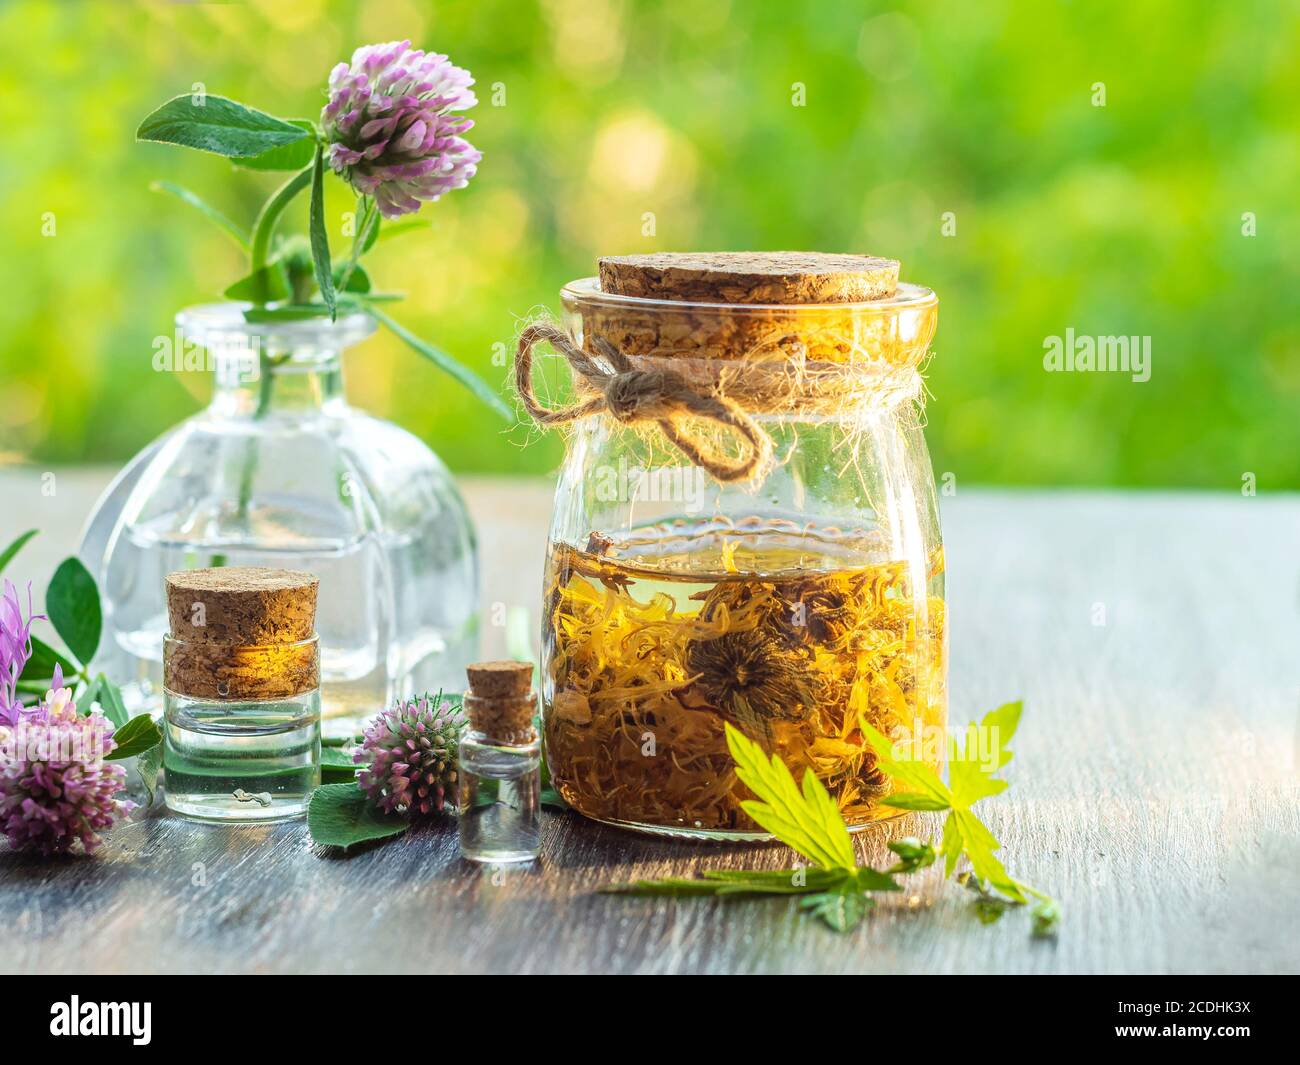 Herbs, bottles on wooden background. Alternative Medicine, Natural Healing. Selective focus Stock Photo